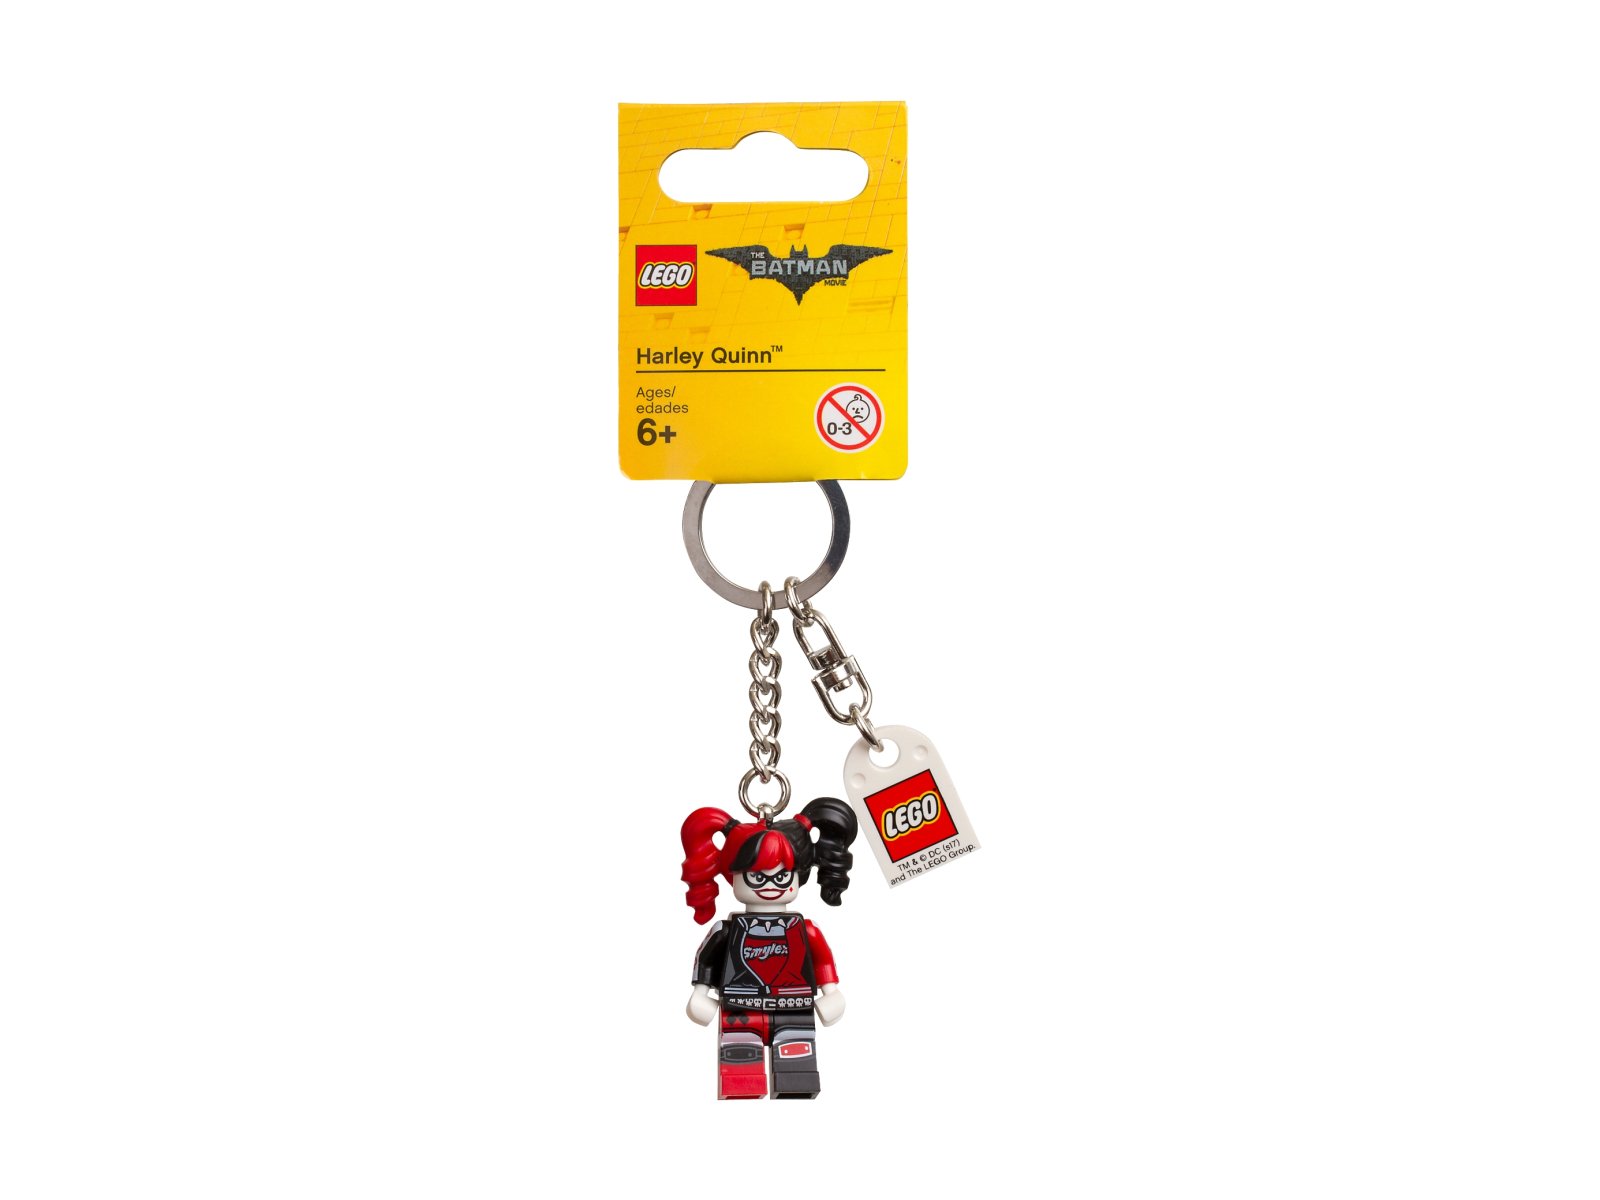 LEGO 853636 Batman Movie Breloczek do kluczy z Harley Quinn™